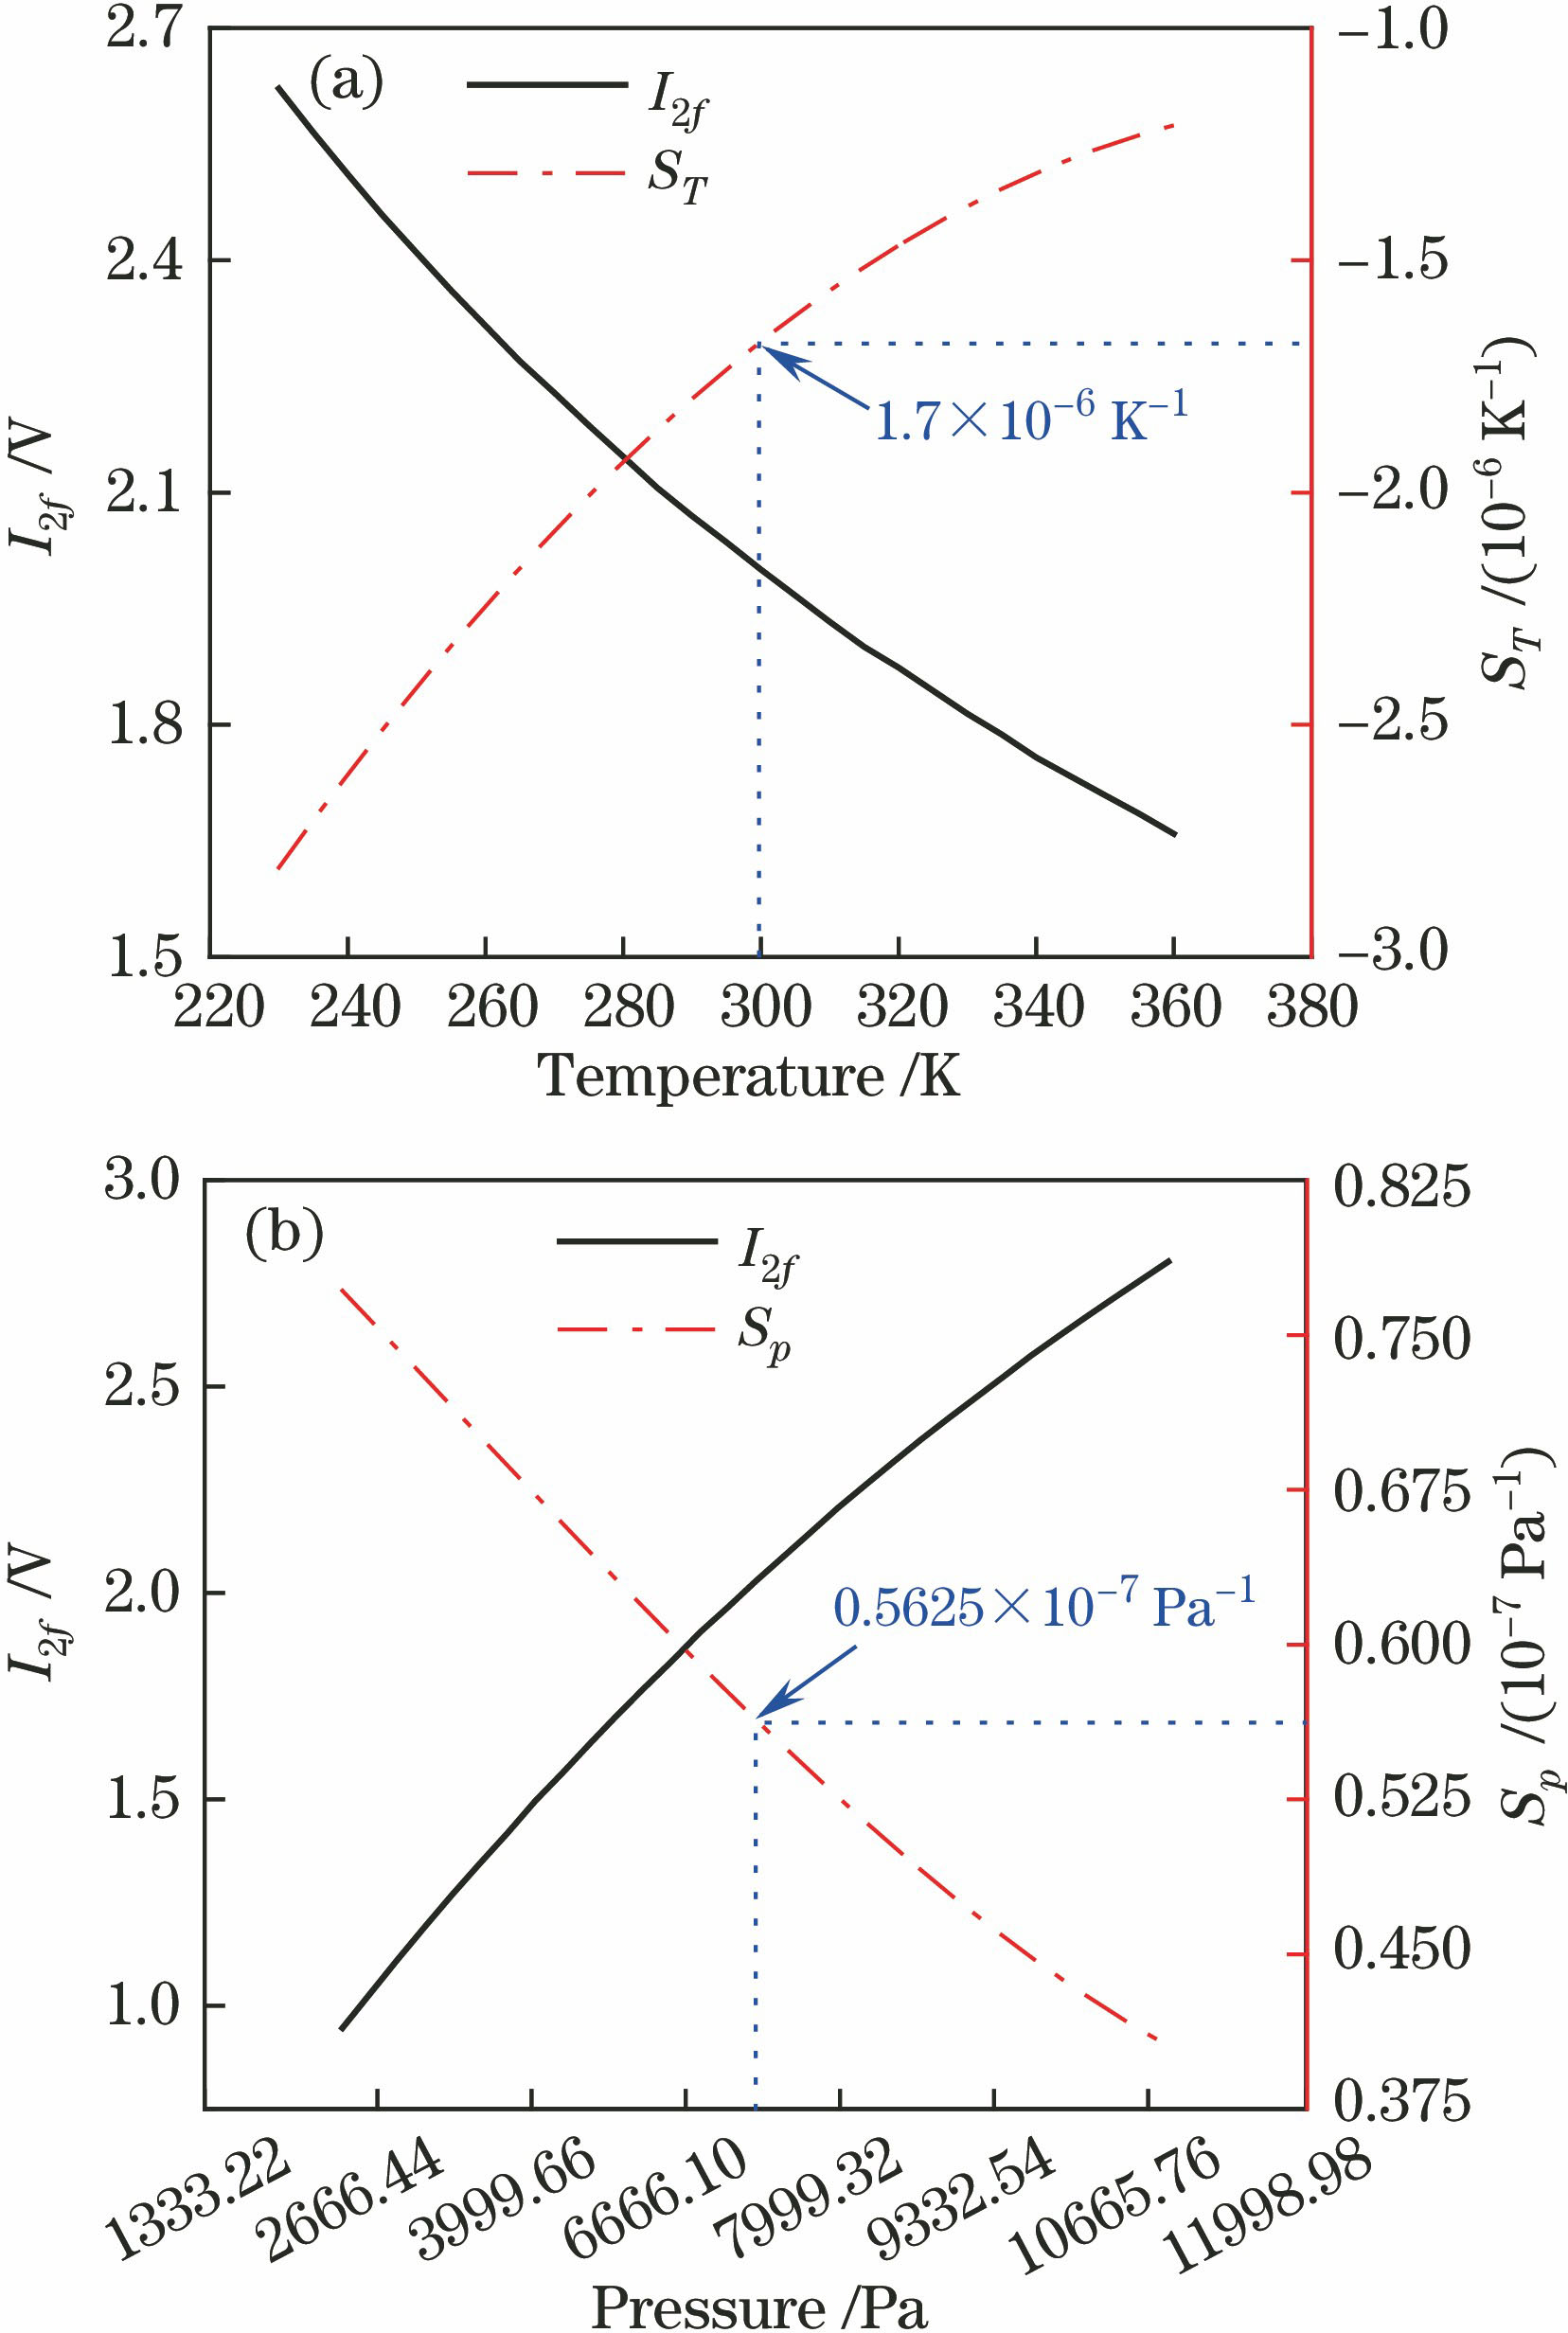 (a) Relationships between 2f signal intensity or temperature sensitivity and temperature; (b) relationships between 2f signal intensity or pressure sensitivity and pressure